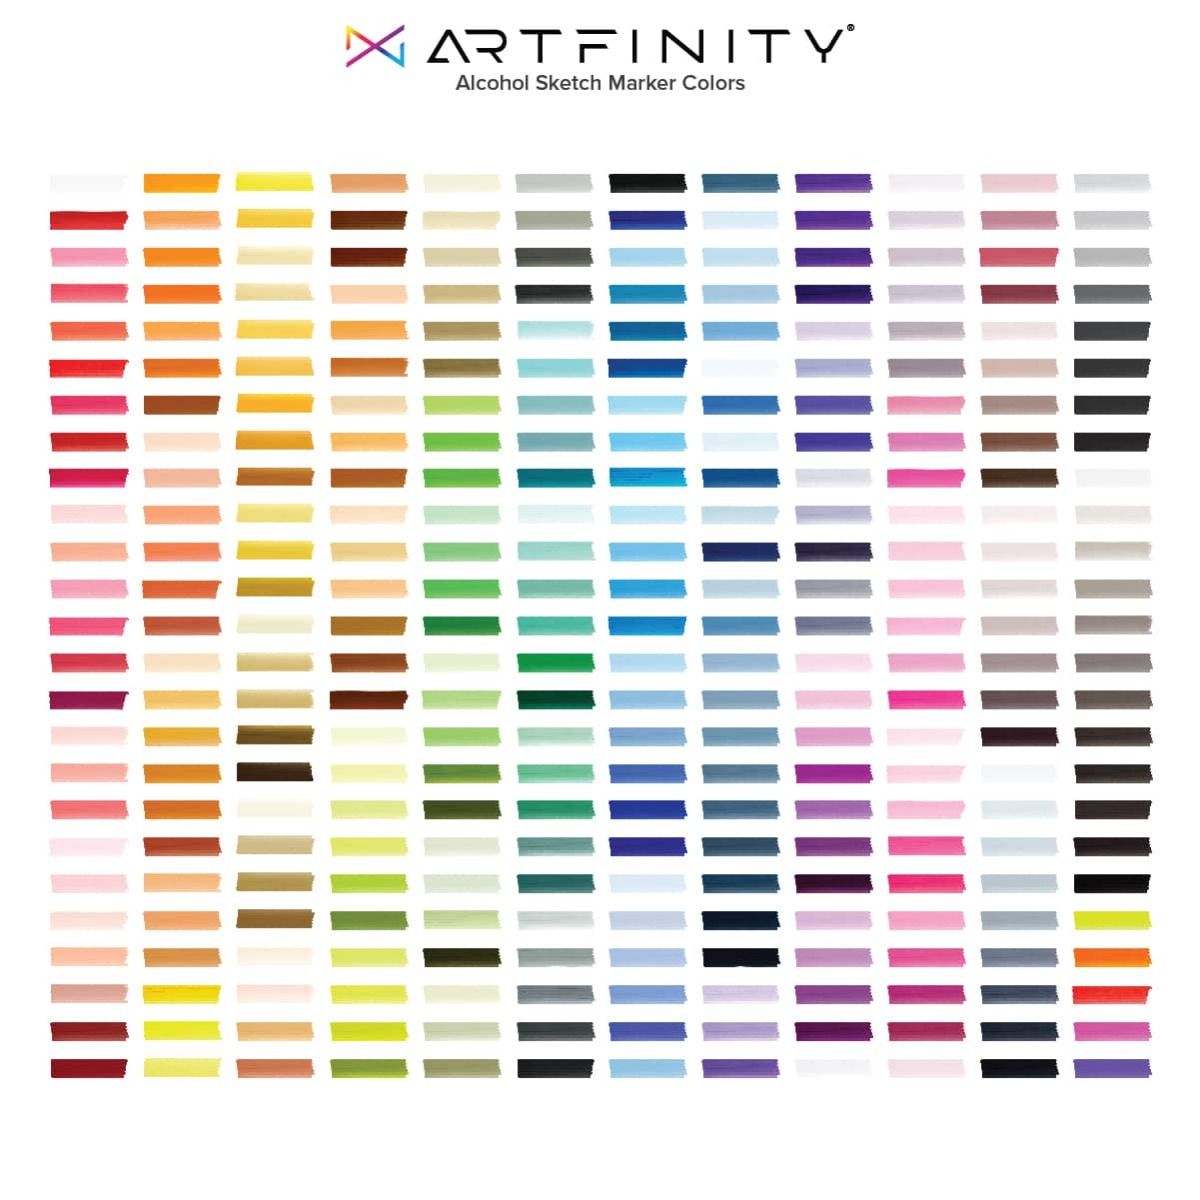 Artfinity Sketch Marker Sets - Vibrant, Professional, Dye-Based Alcohol Markers for Artists, Drawing, Students, Travel, & More! - [Cobalt Blue B1-8 